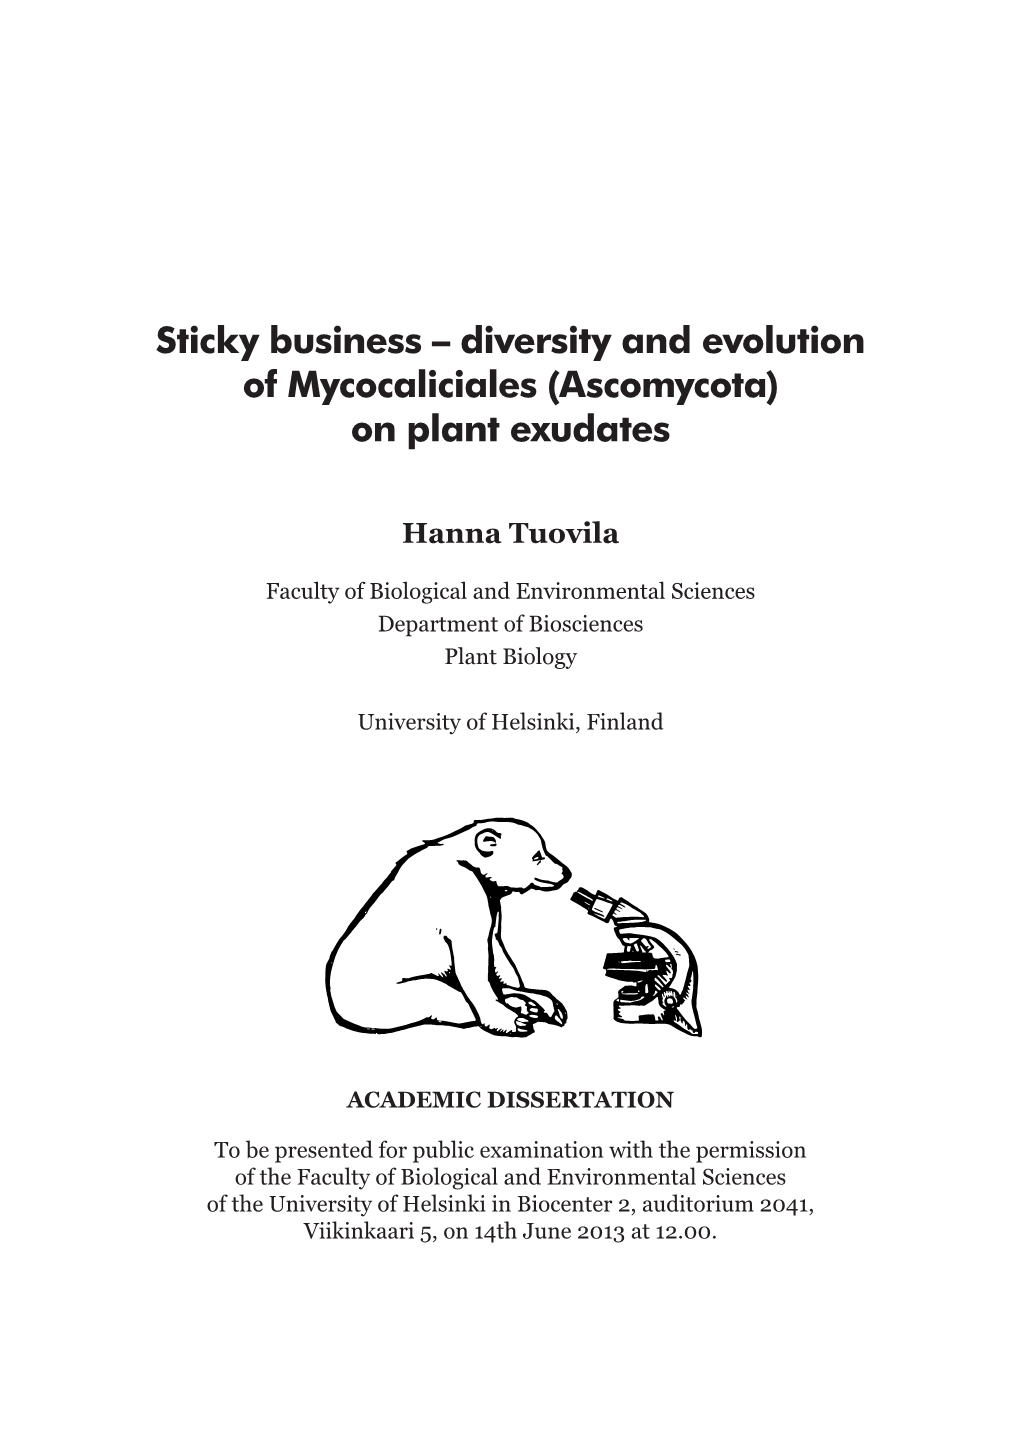 Diversity and Evolution of Mycocaliciales (Ascomycota) on Plant Exudates